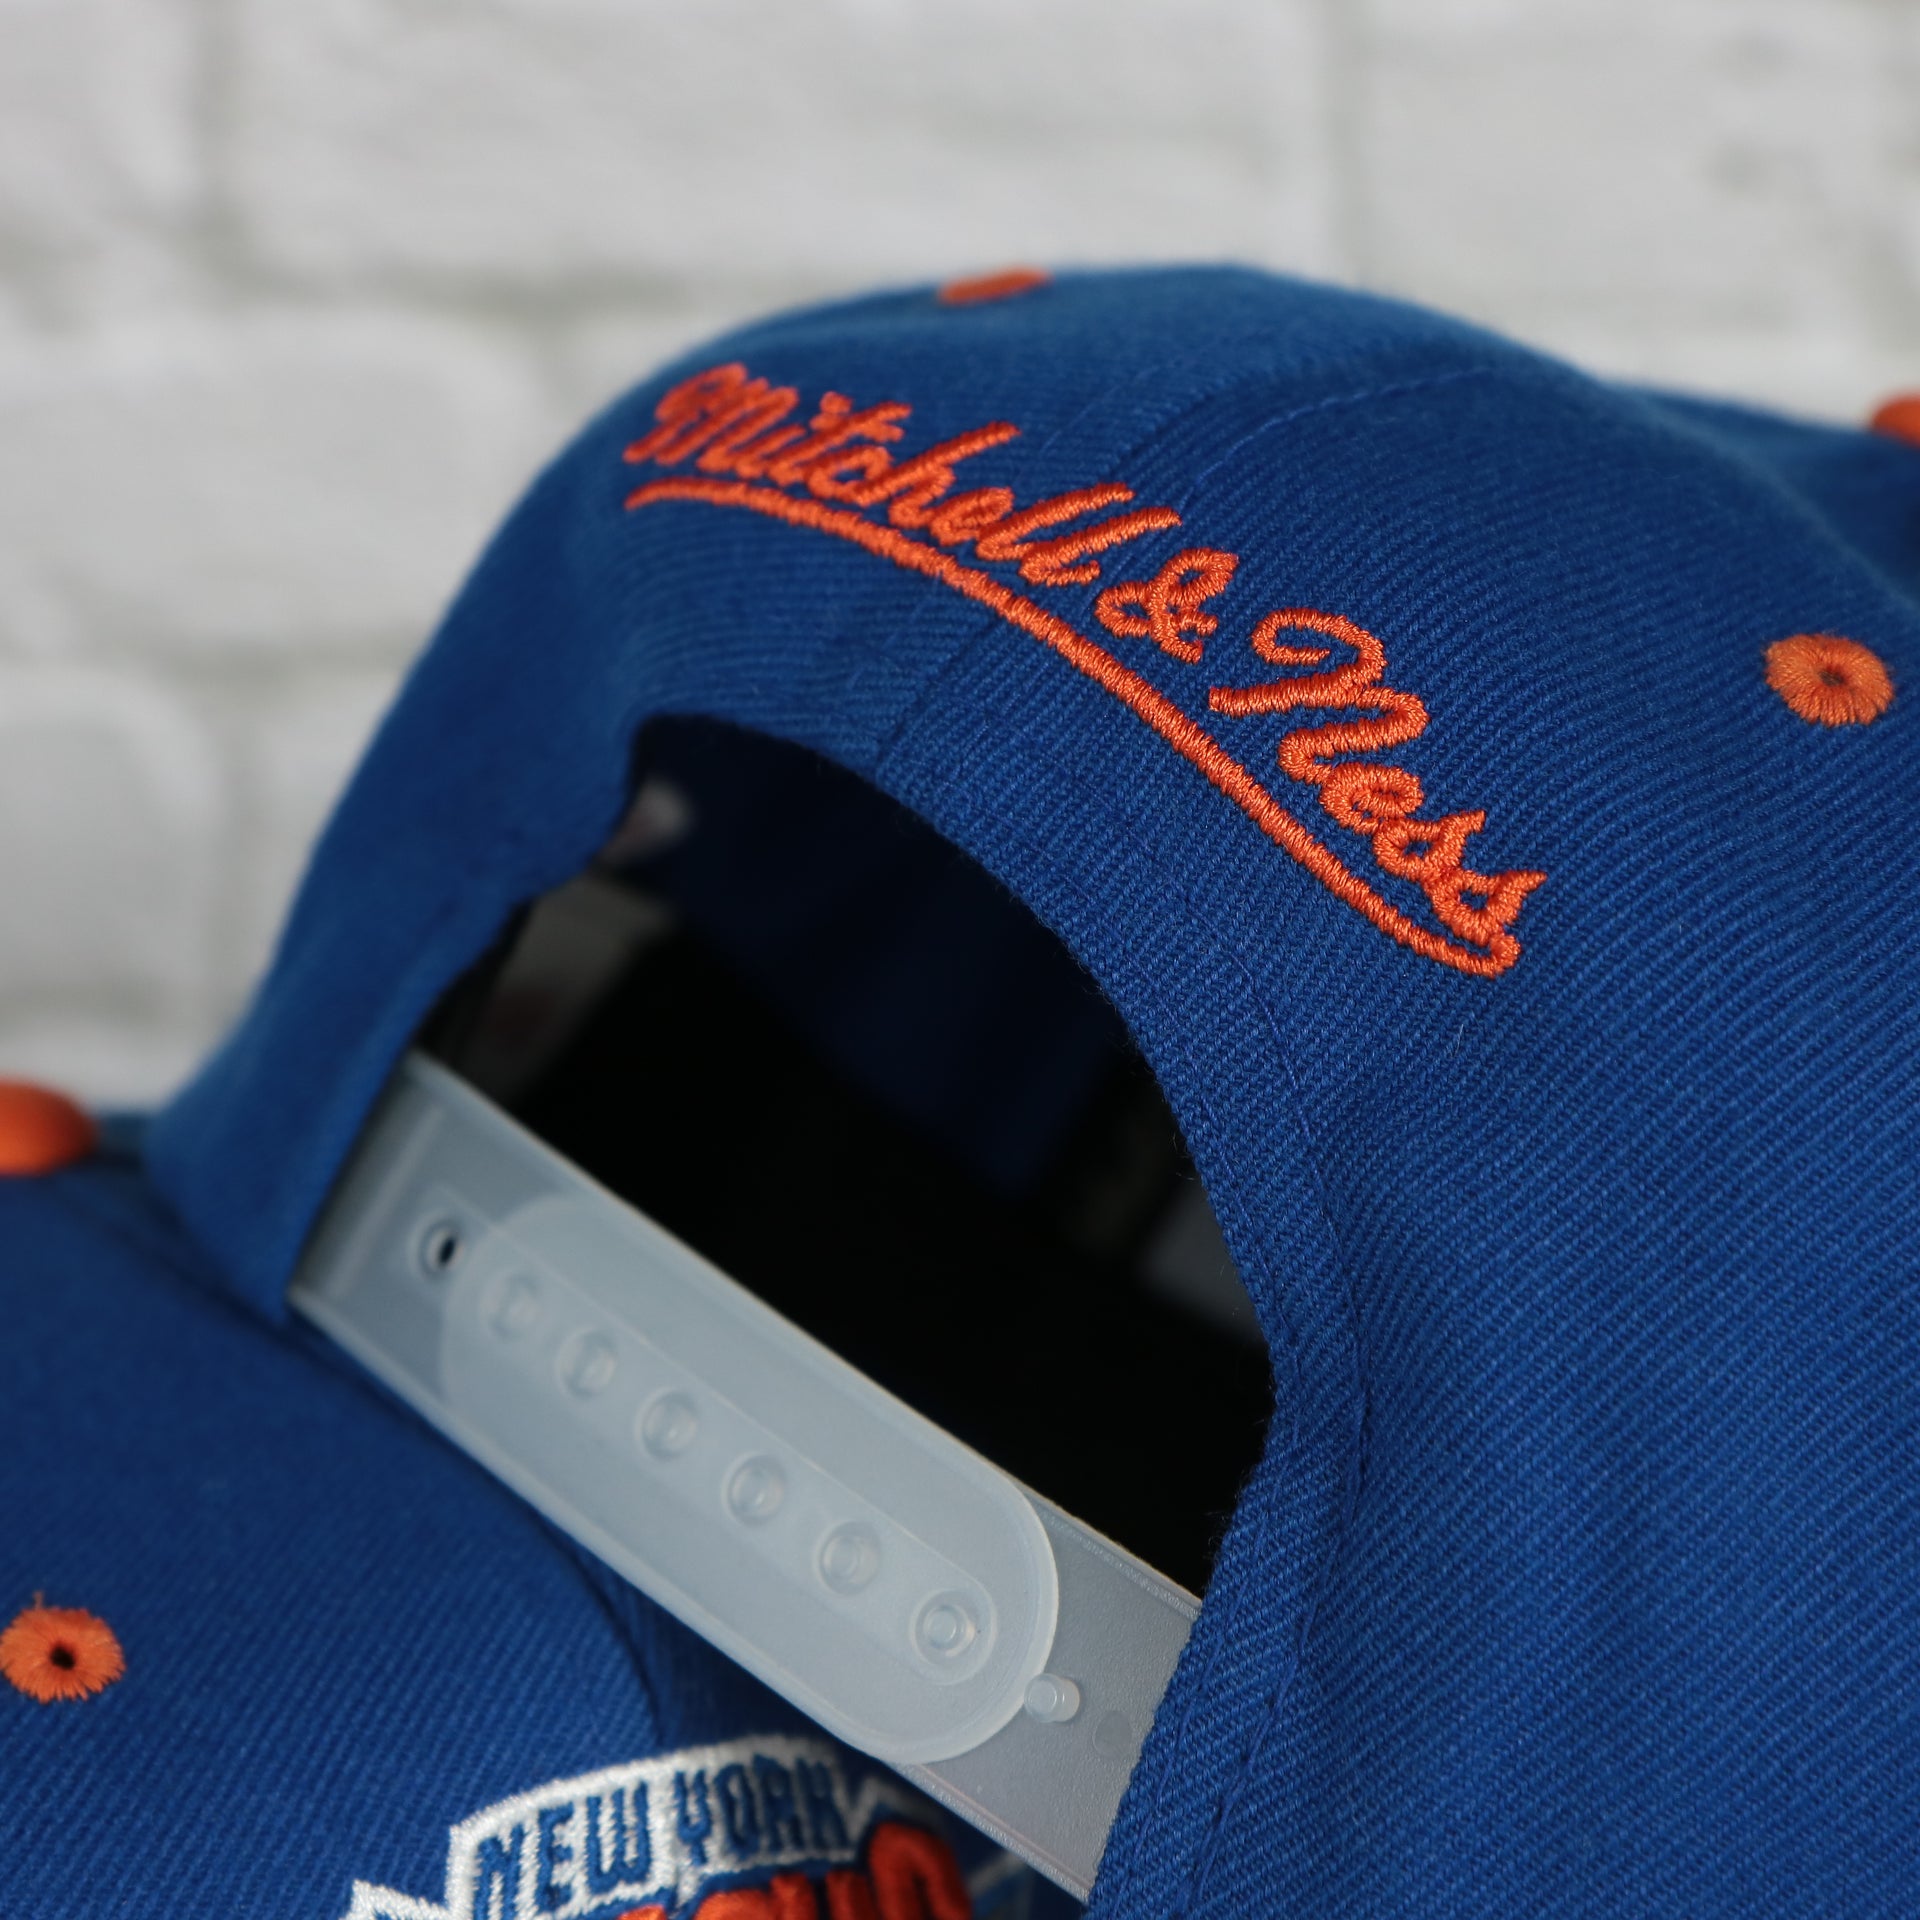 mitchell and ness logo on the New York Knicks Snapback Hat | 3M Reflective Mitchell and Ness Vintage Knicks Snapback Cap